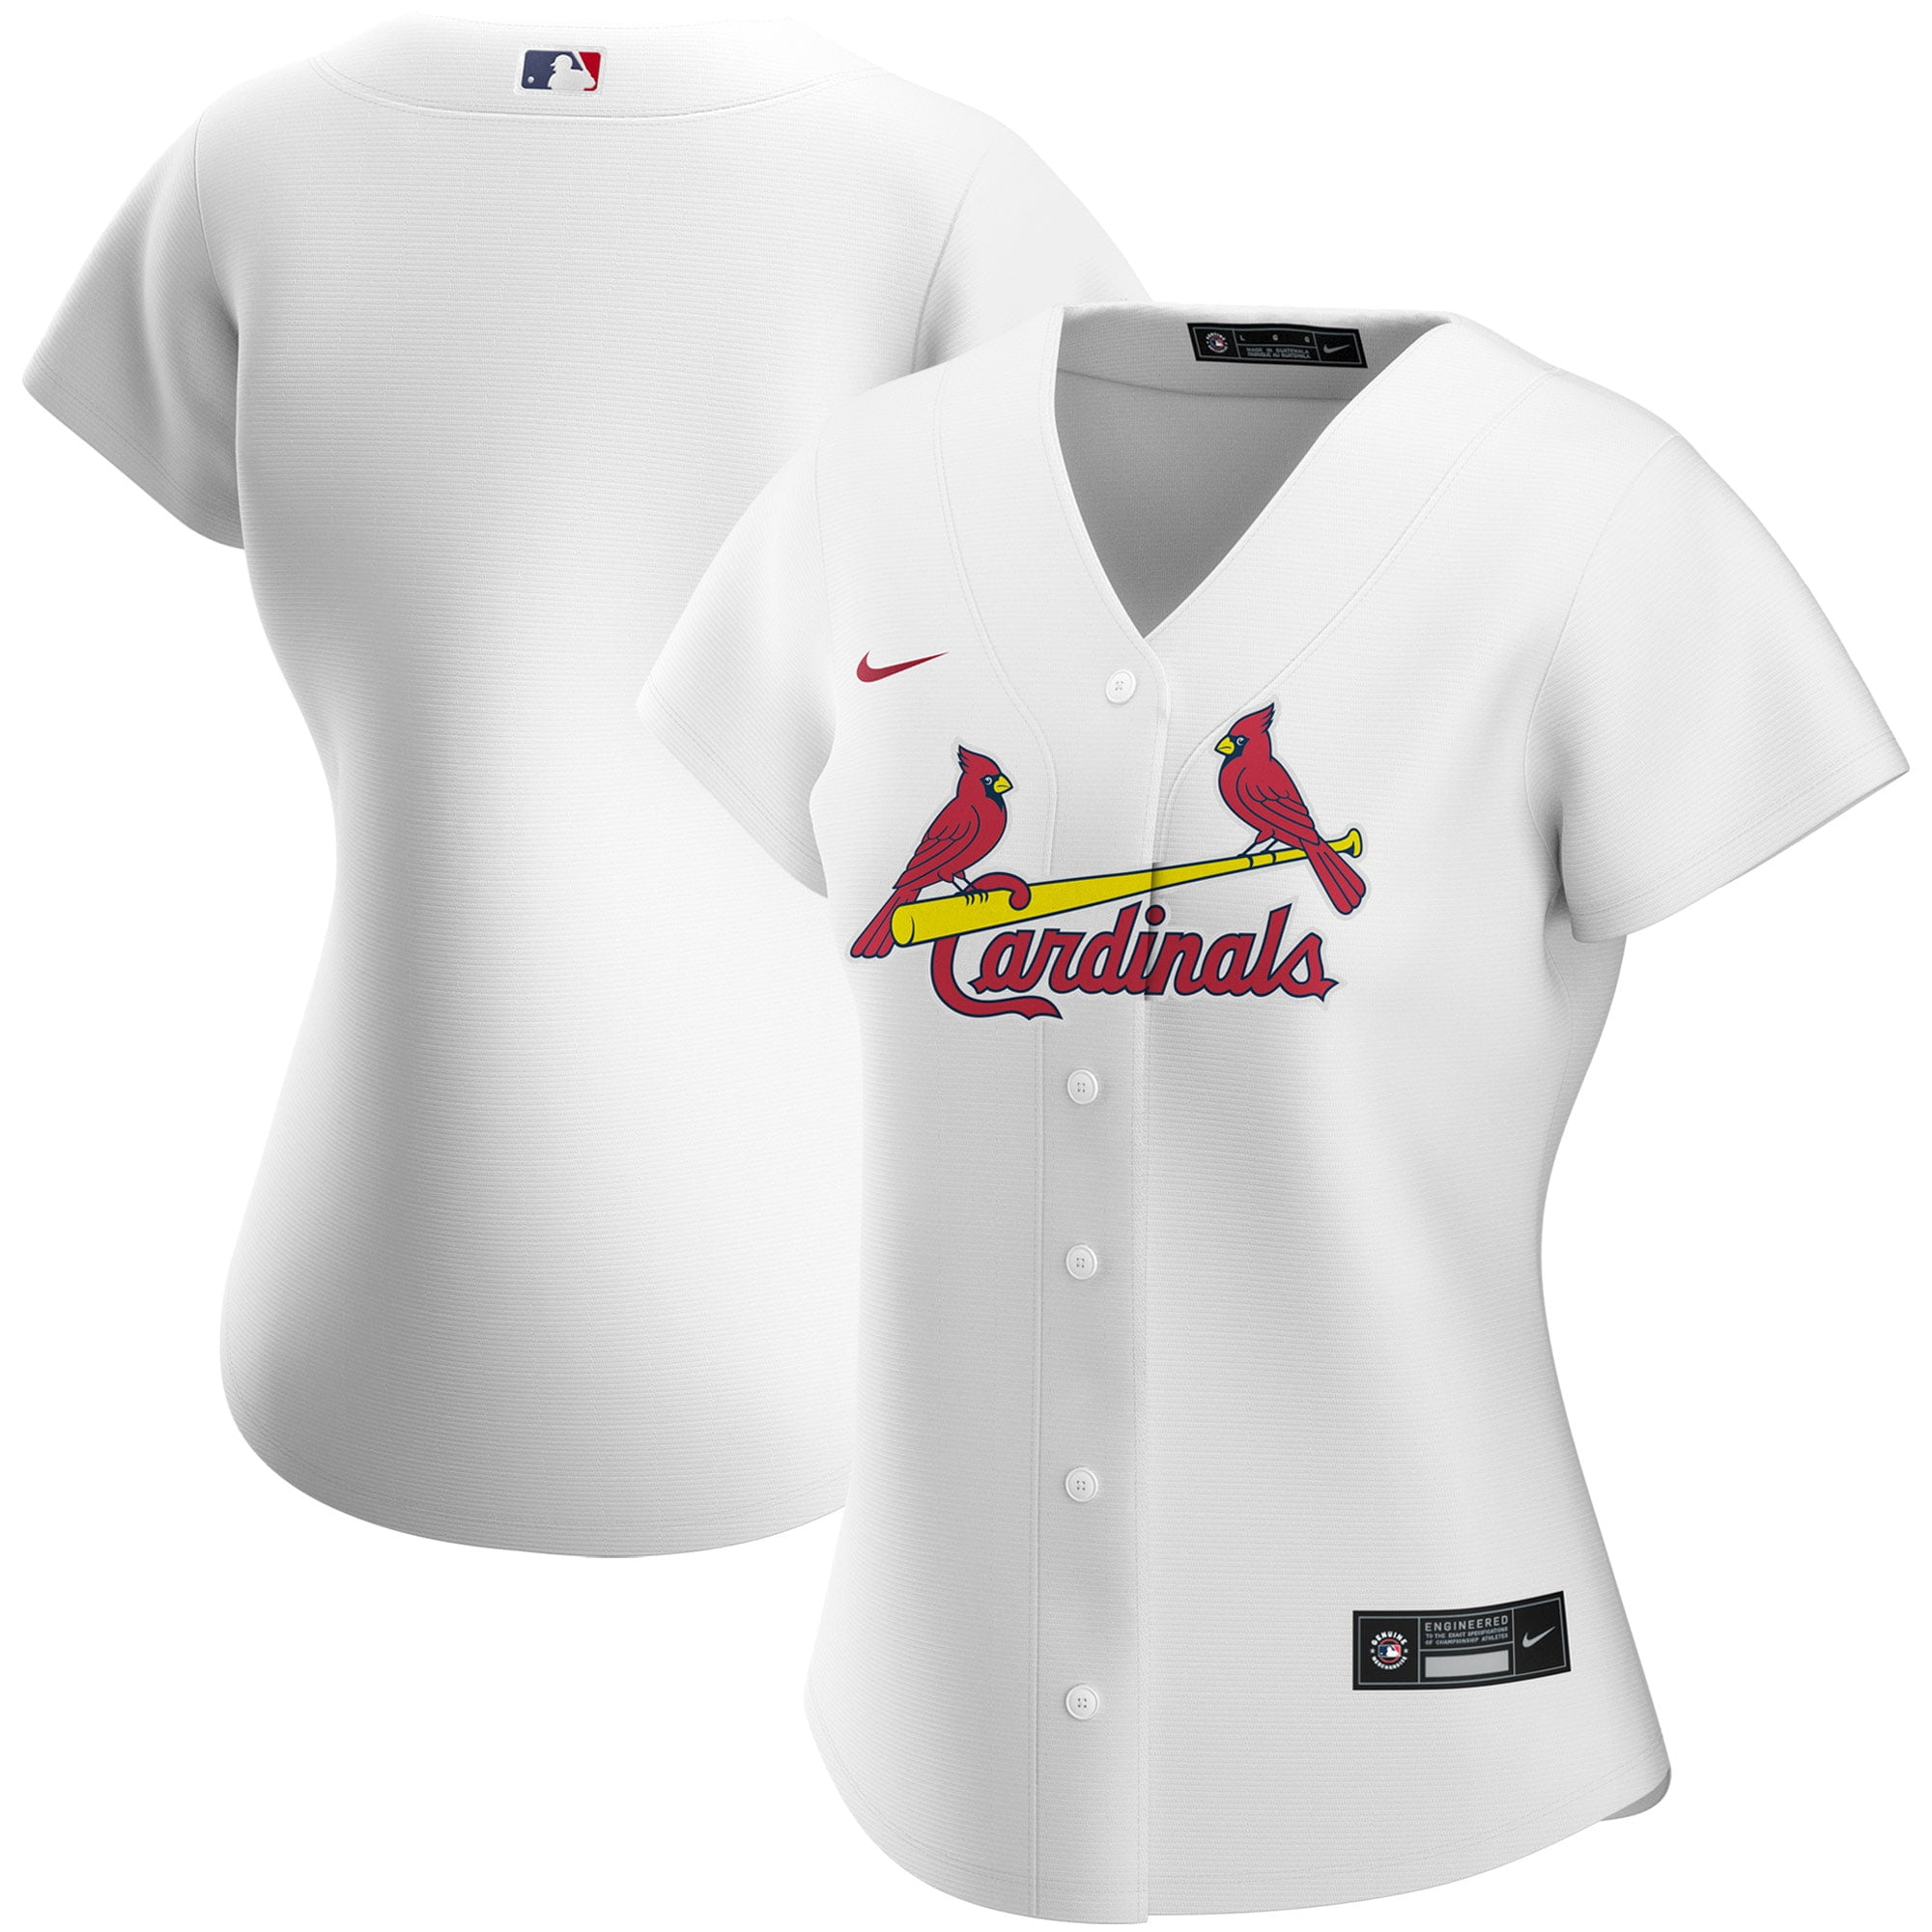 buy st louis cardinals jersey